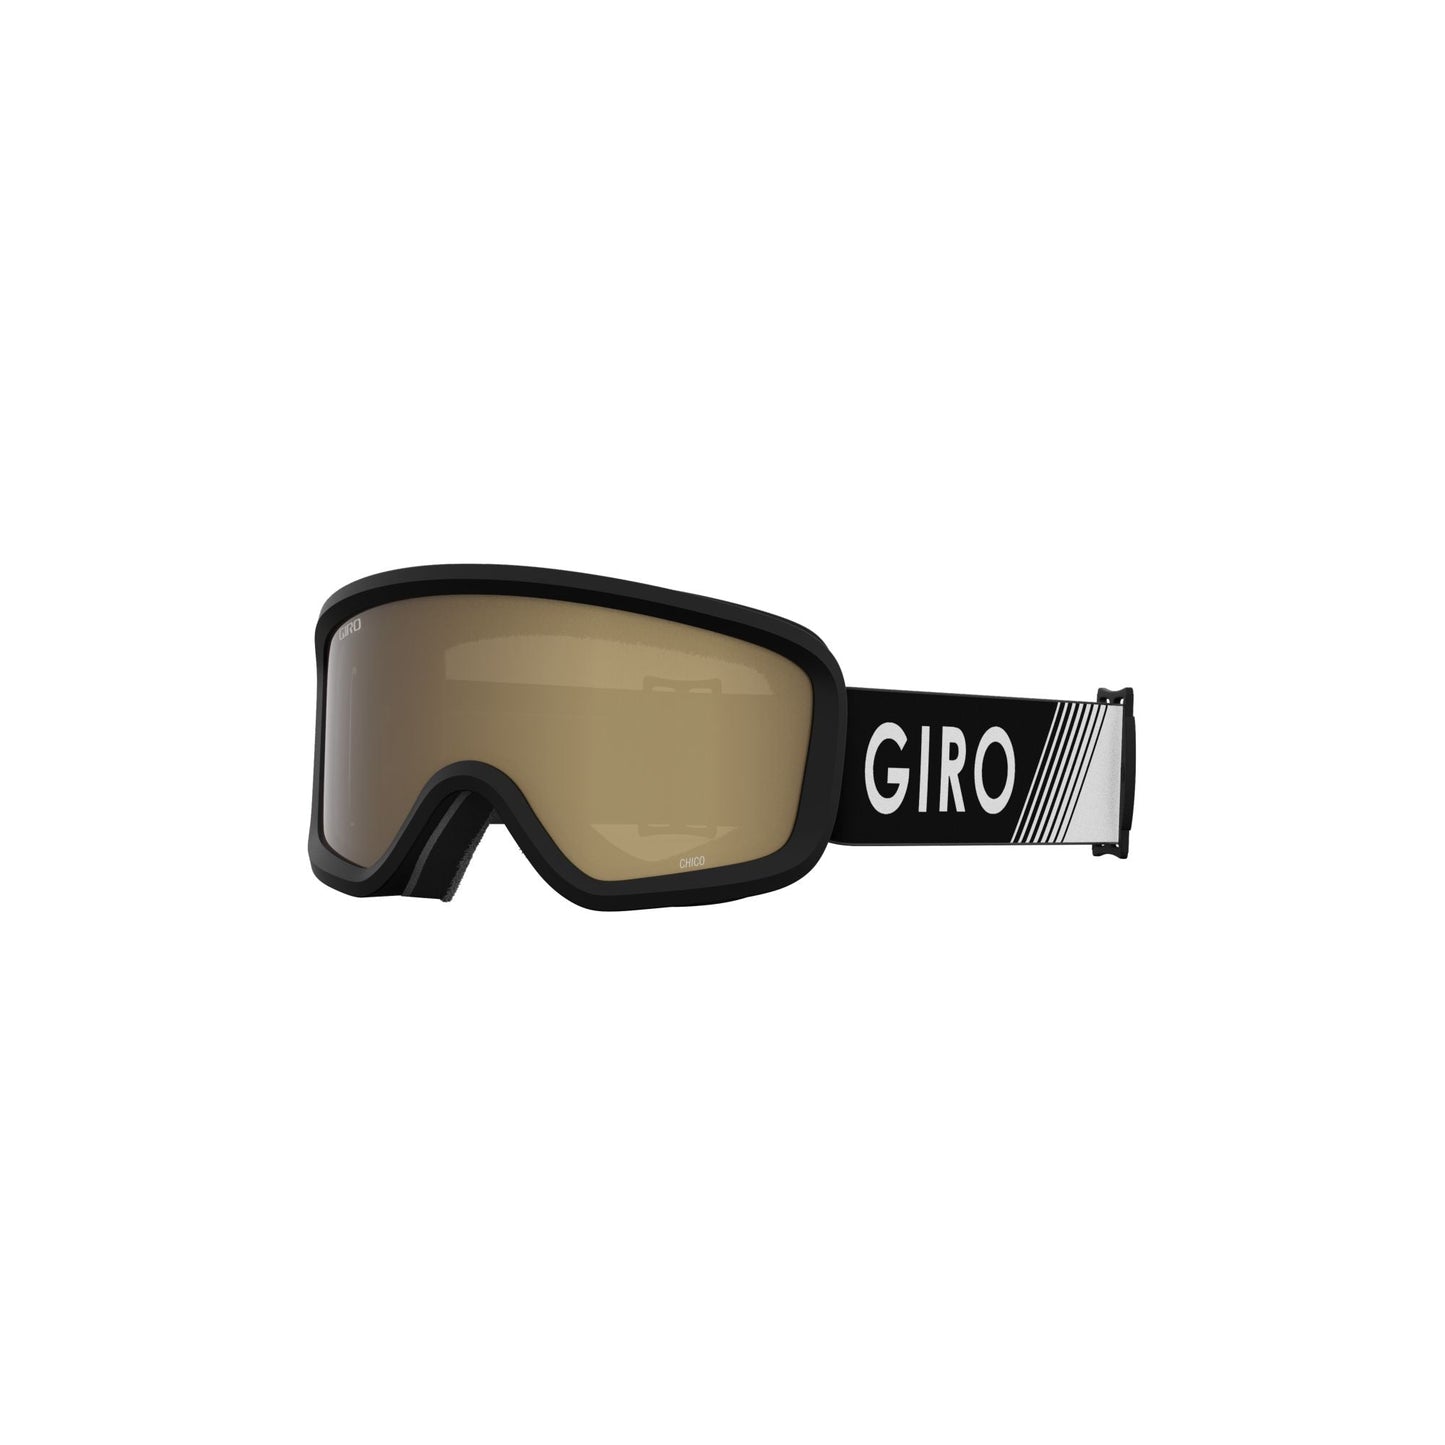 Giro Youth Chico 2.0 Snow Goggle - OpenBox Black Zoom Amber Rose - Giro Snow Snow Goggles